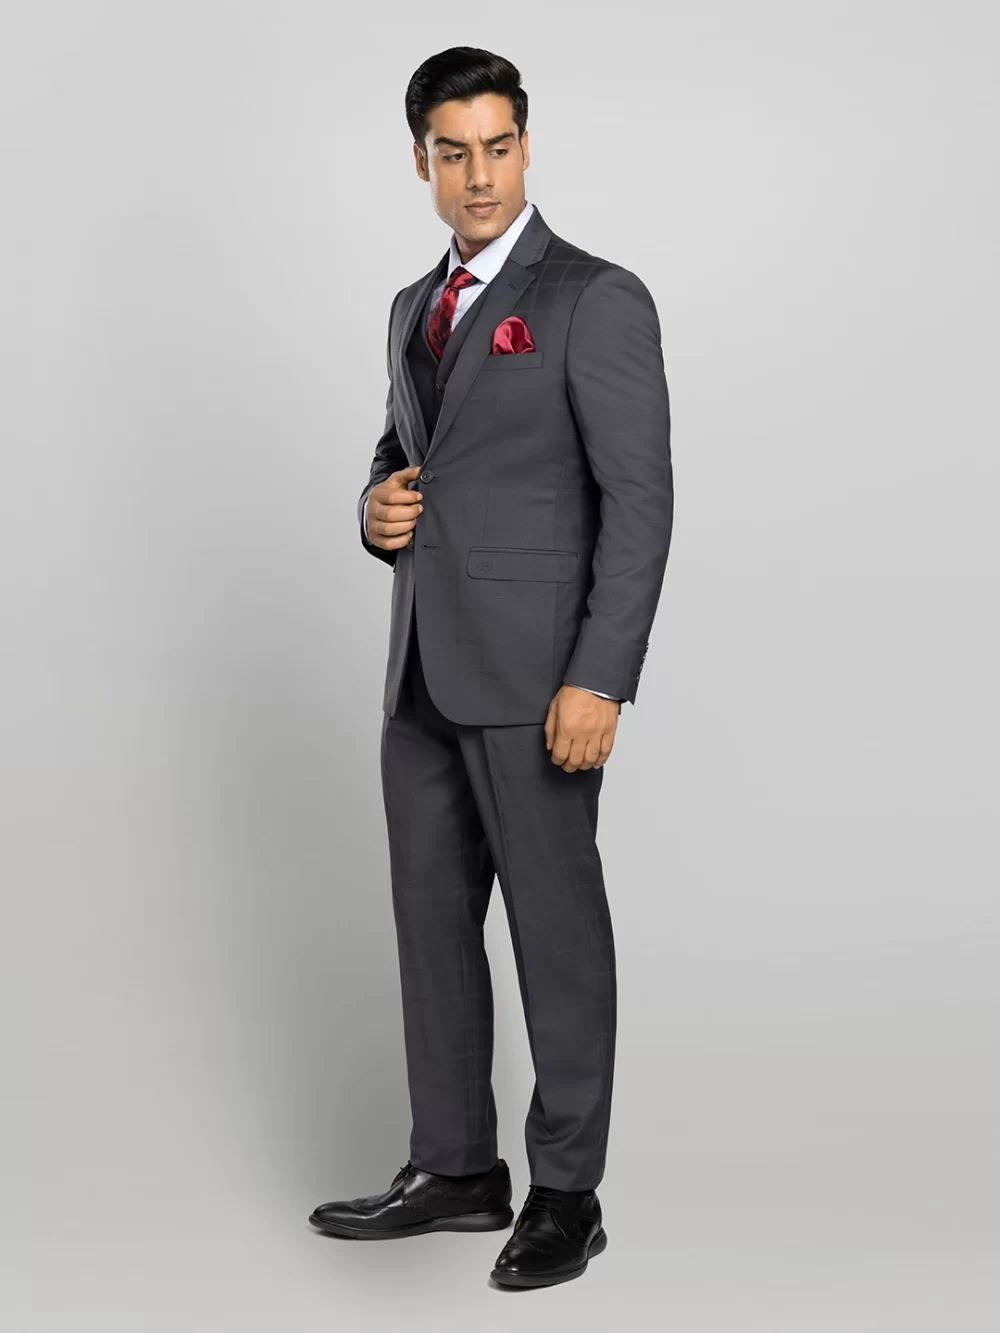 Men's 3 piece Checkered Business Suit - Grey